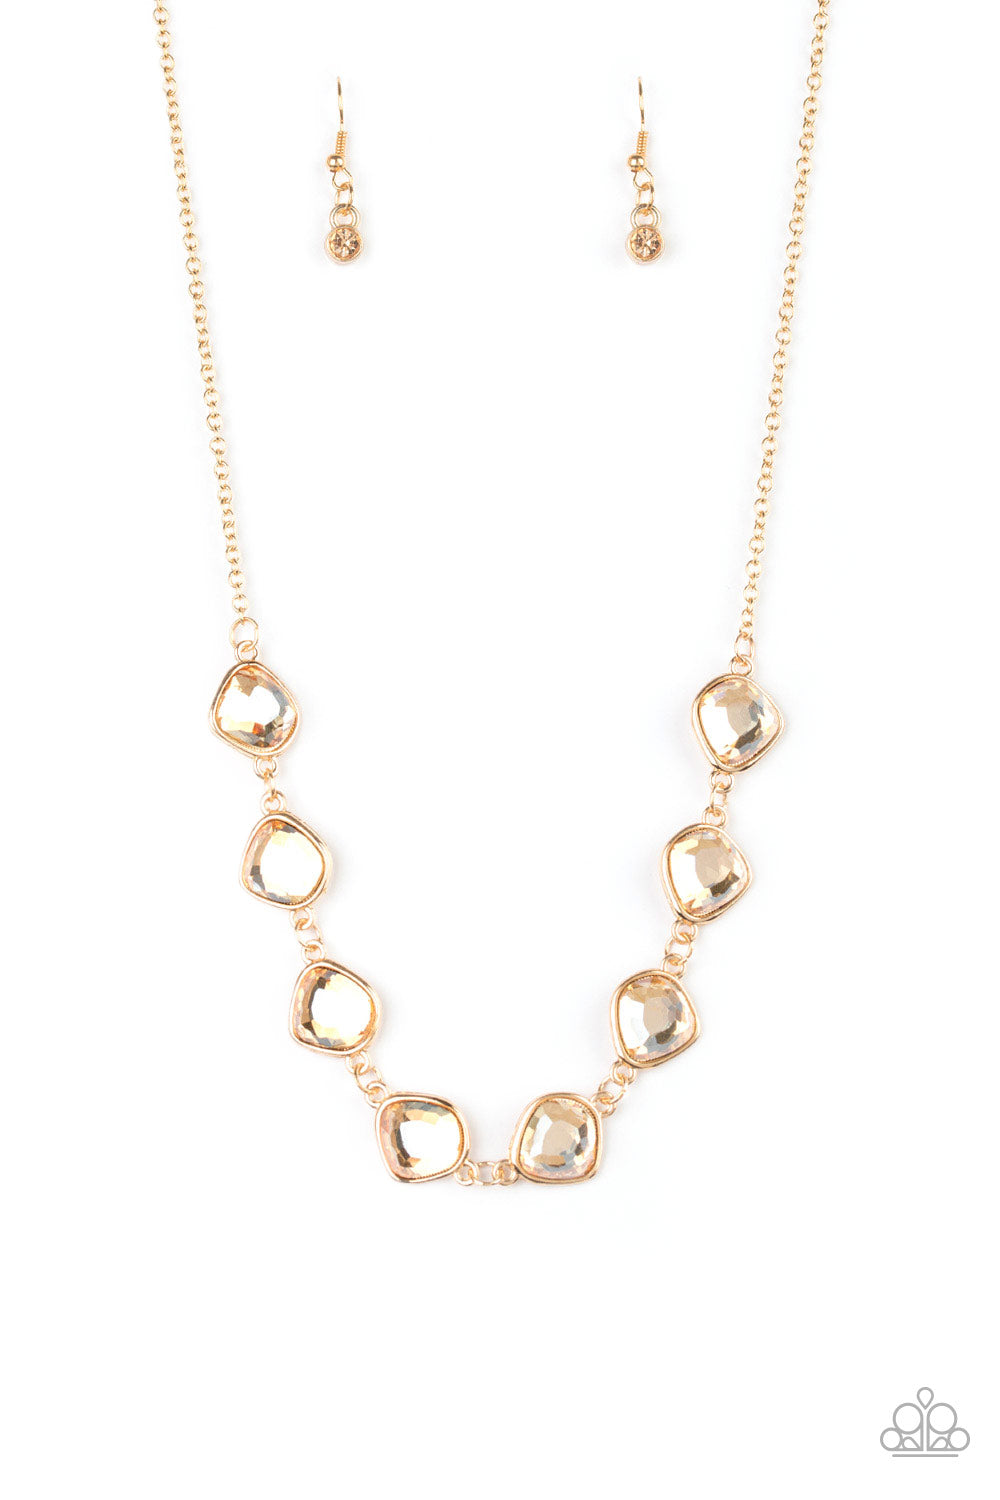 The Imperfectionist - Gold Necklace Set & Bracelet Combo Set - Princess Glam Shop